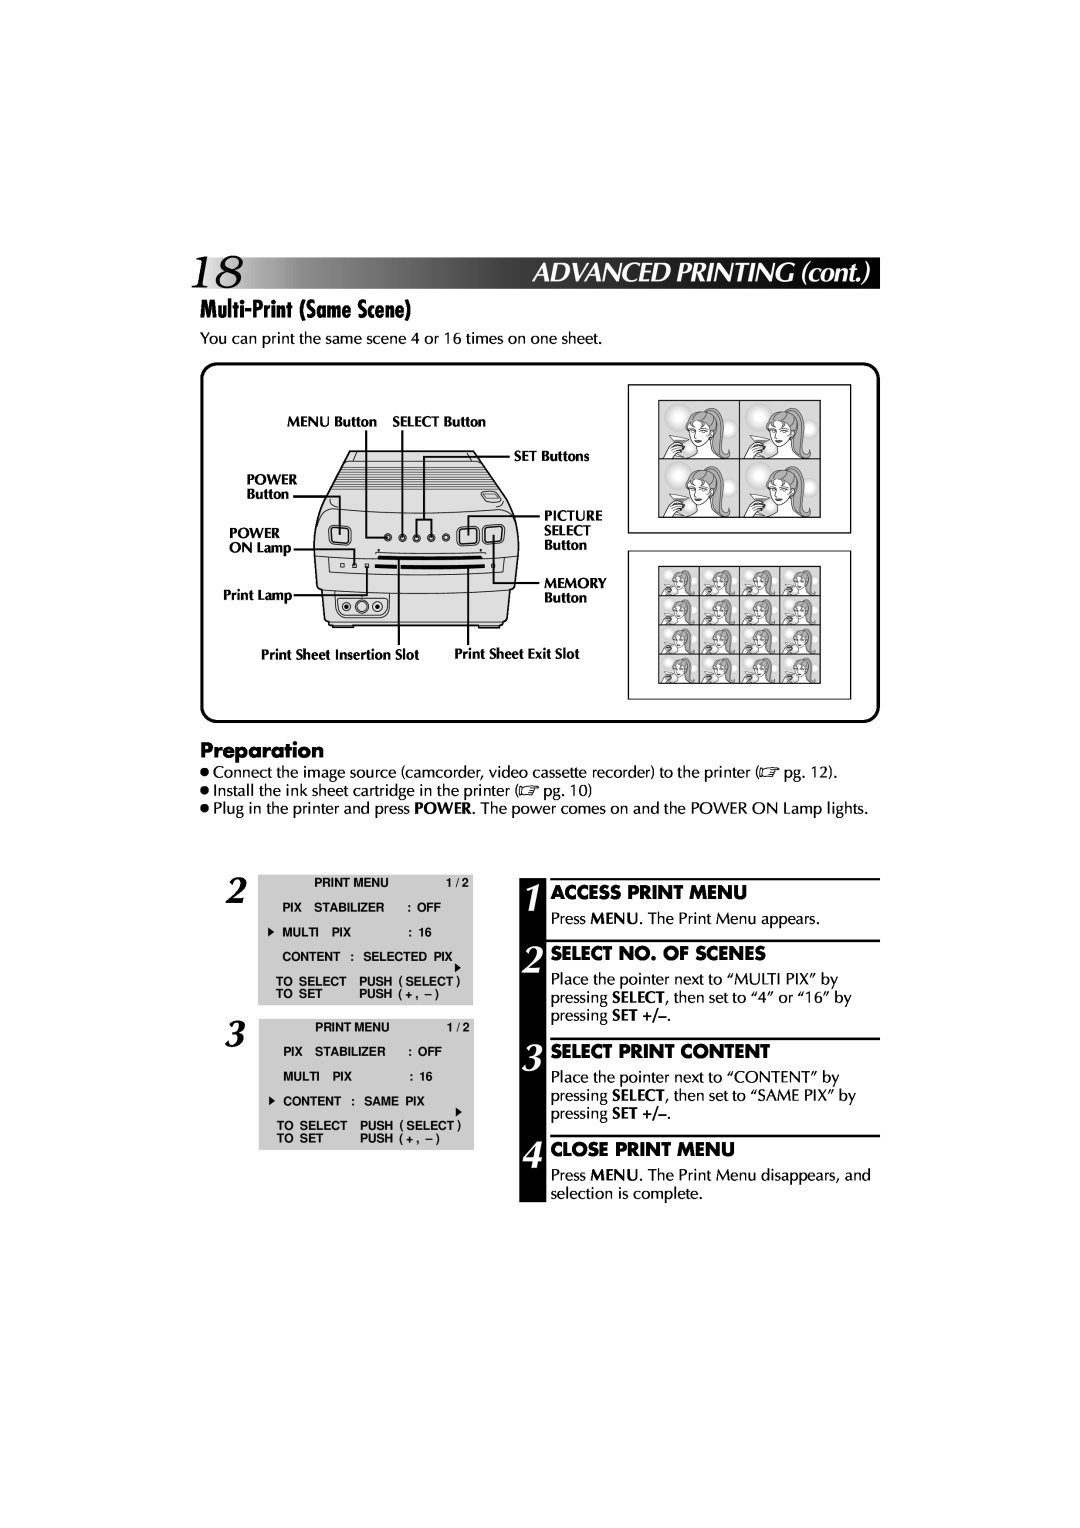 JVC GV-PT1 manual ADVANCEDPRINTINGcont, Multi-Print Same Scene, Preparation, Access Print Menu, Select Print Content 